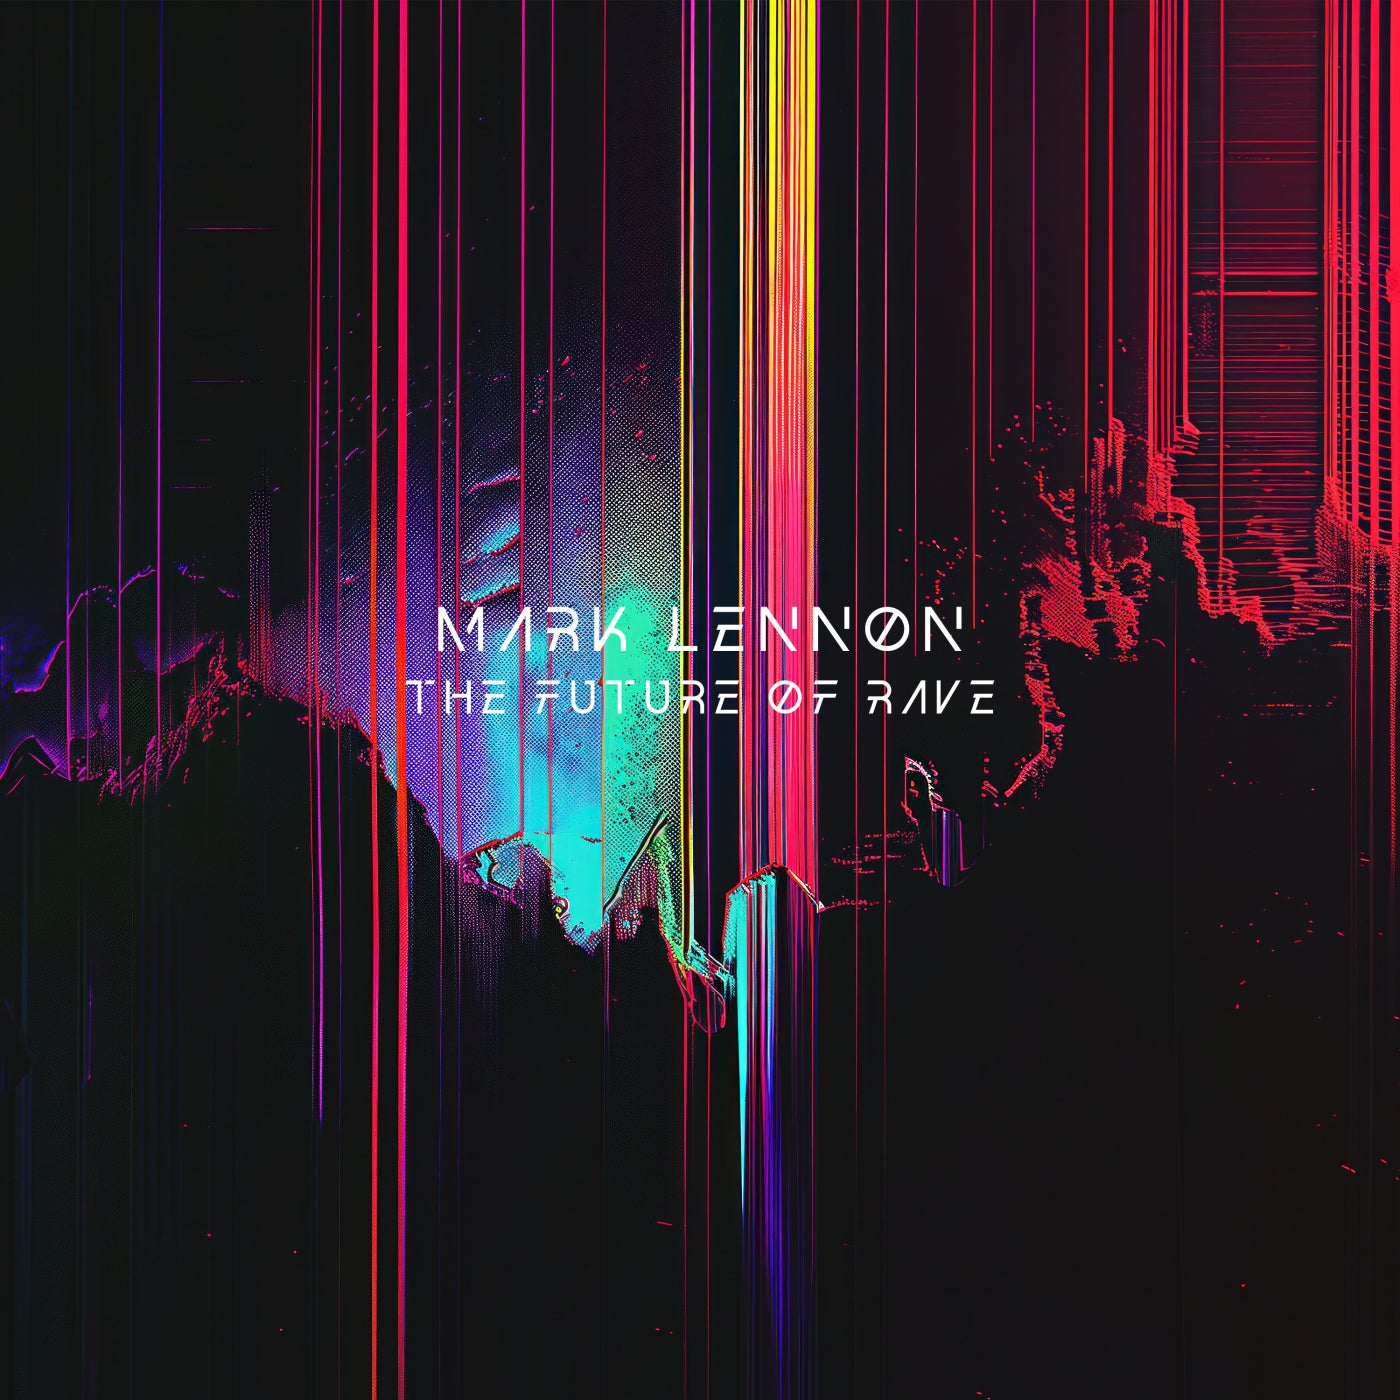 Cover - Mark Lennon - The Future of Rave (Original Mix)